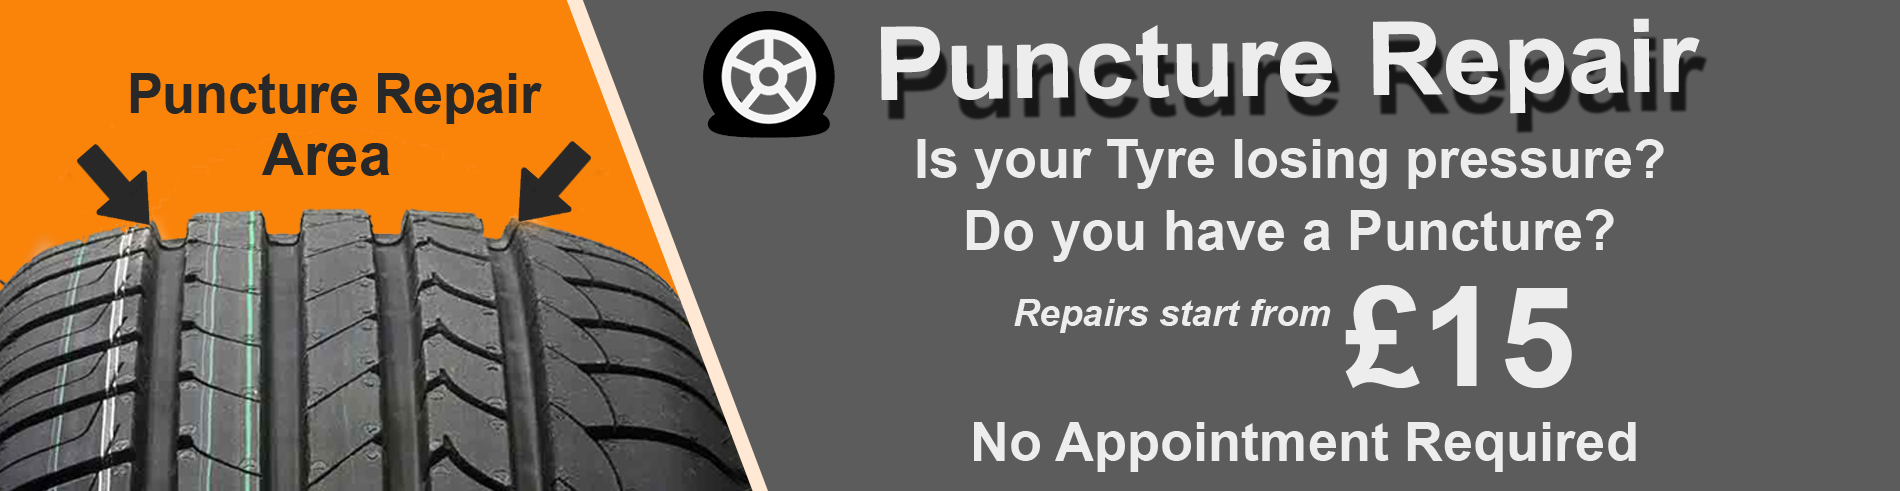 tyre puncture repair rotherham